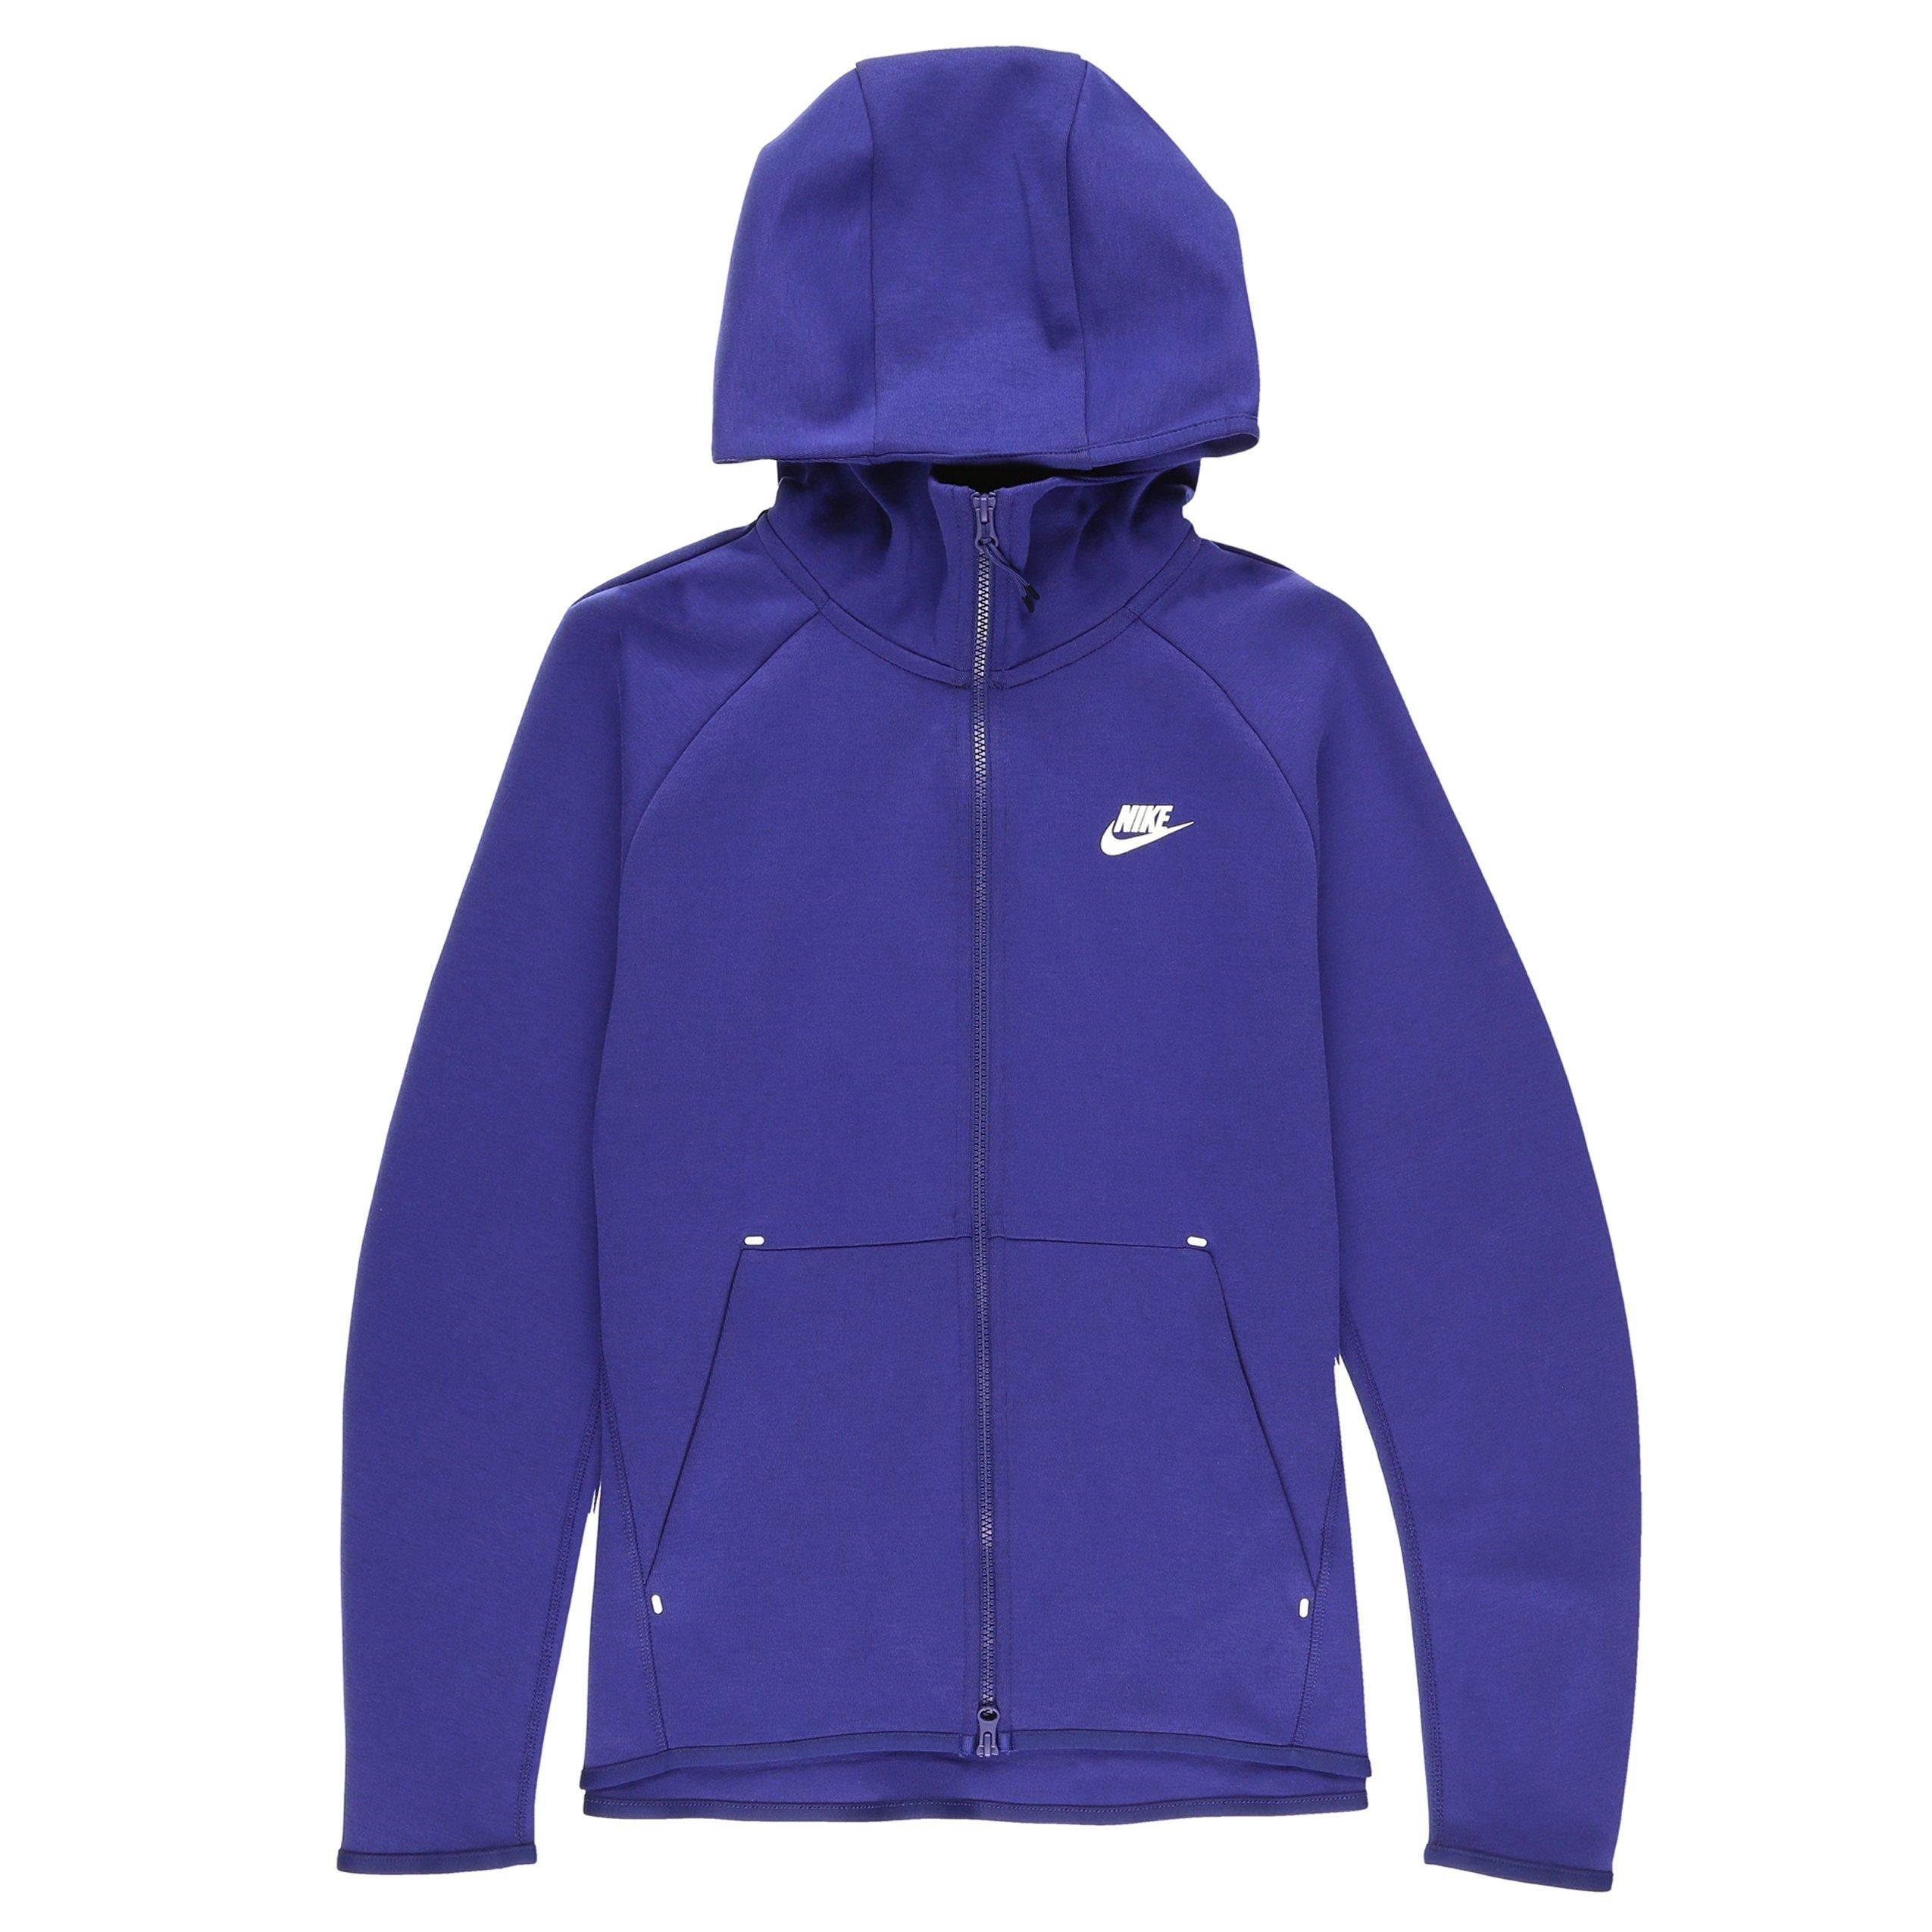 Nike Tech Fleece Zip-up Hoodie in Purple for Men - Lyst